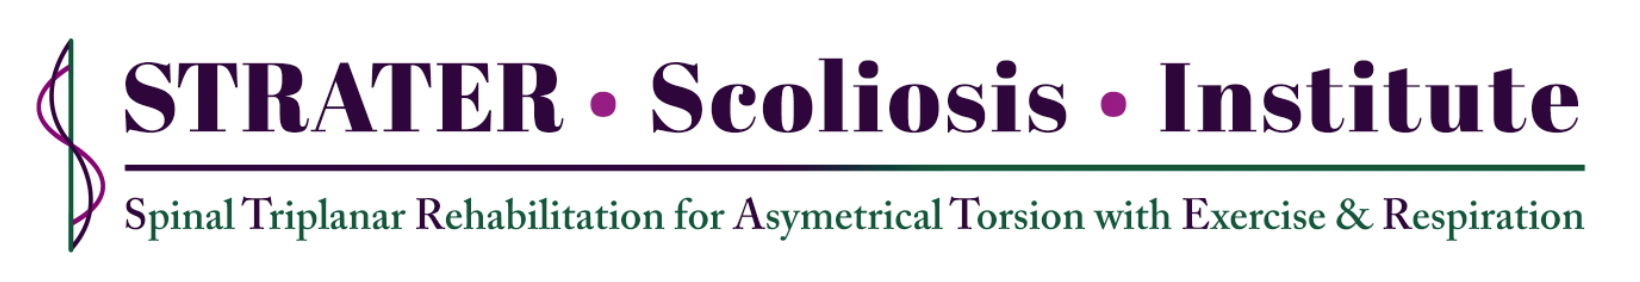 STRATER Scoliosis Institute